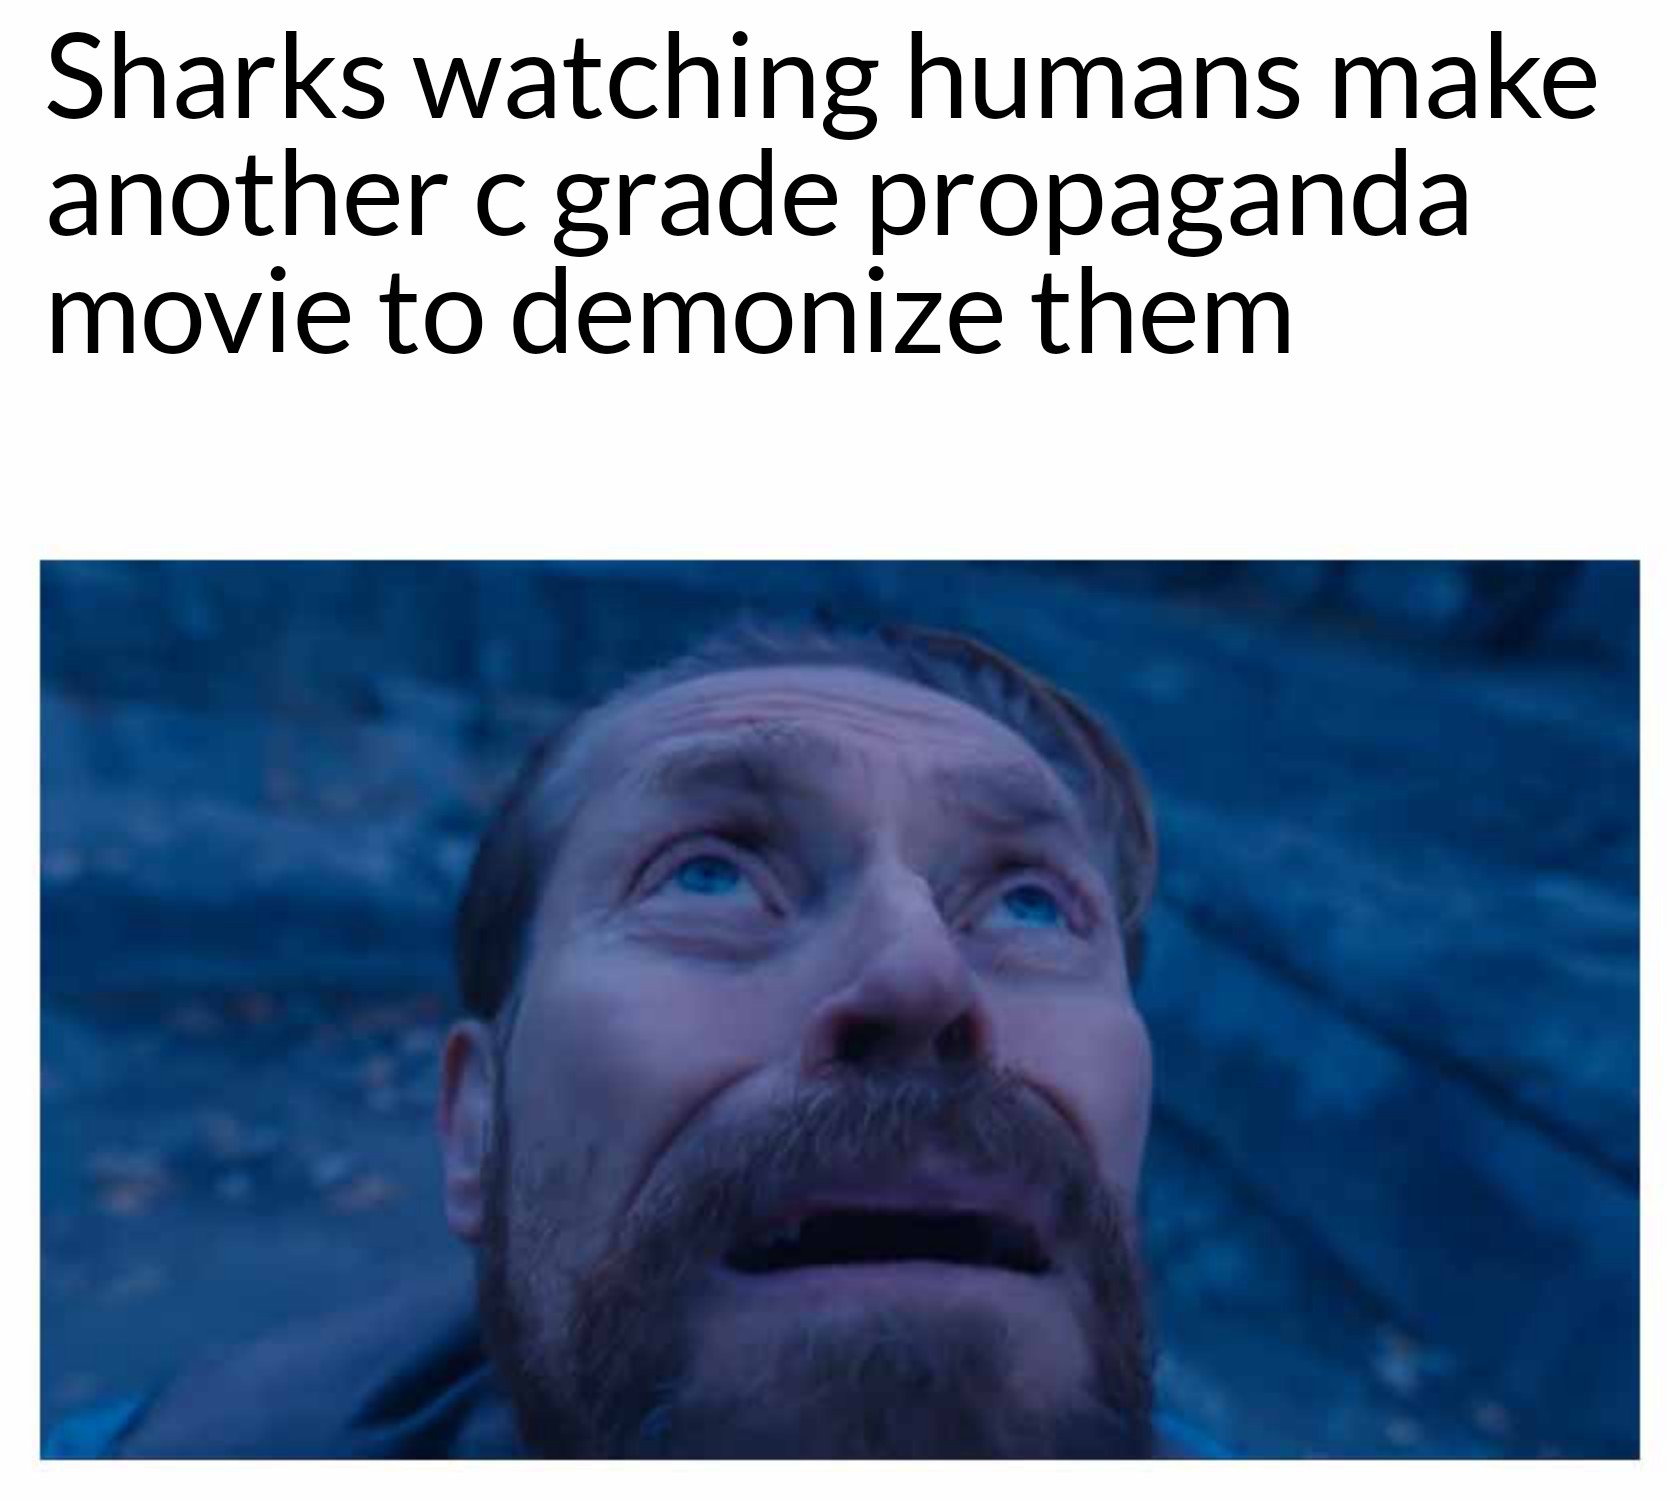 funny memes - dank memes - tag cloud - Sharks watching humans make another c grade propaganda movie to demonize them 10